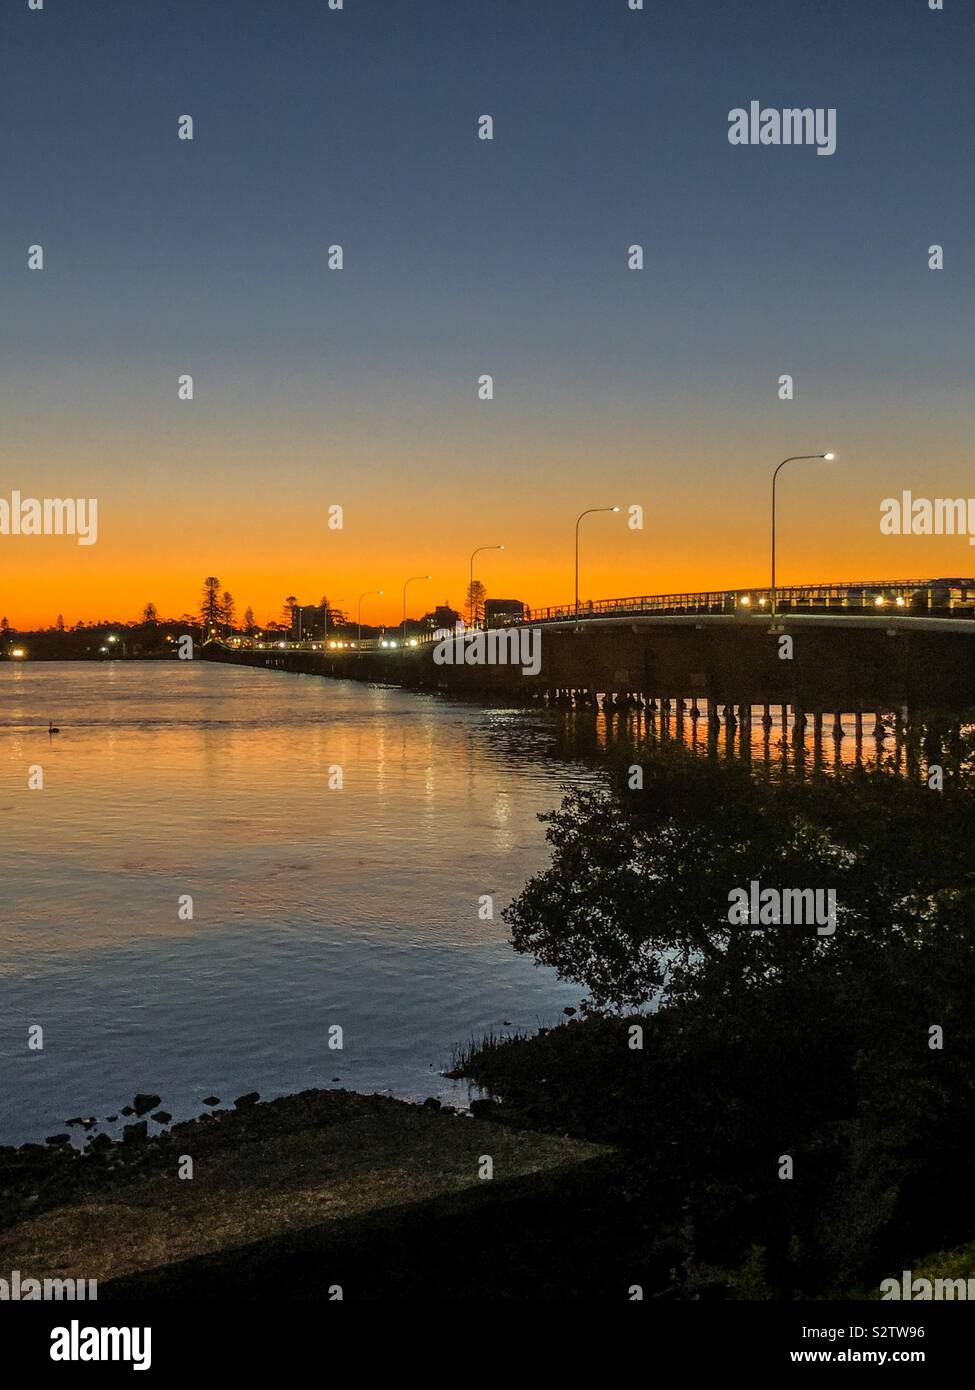 Bridge at Forster - sunset twilight Stock Photo